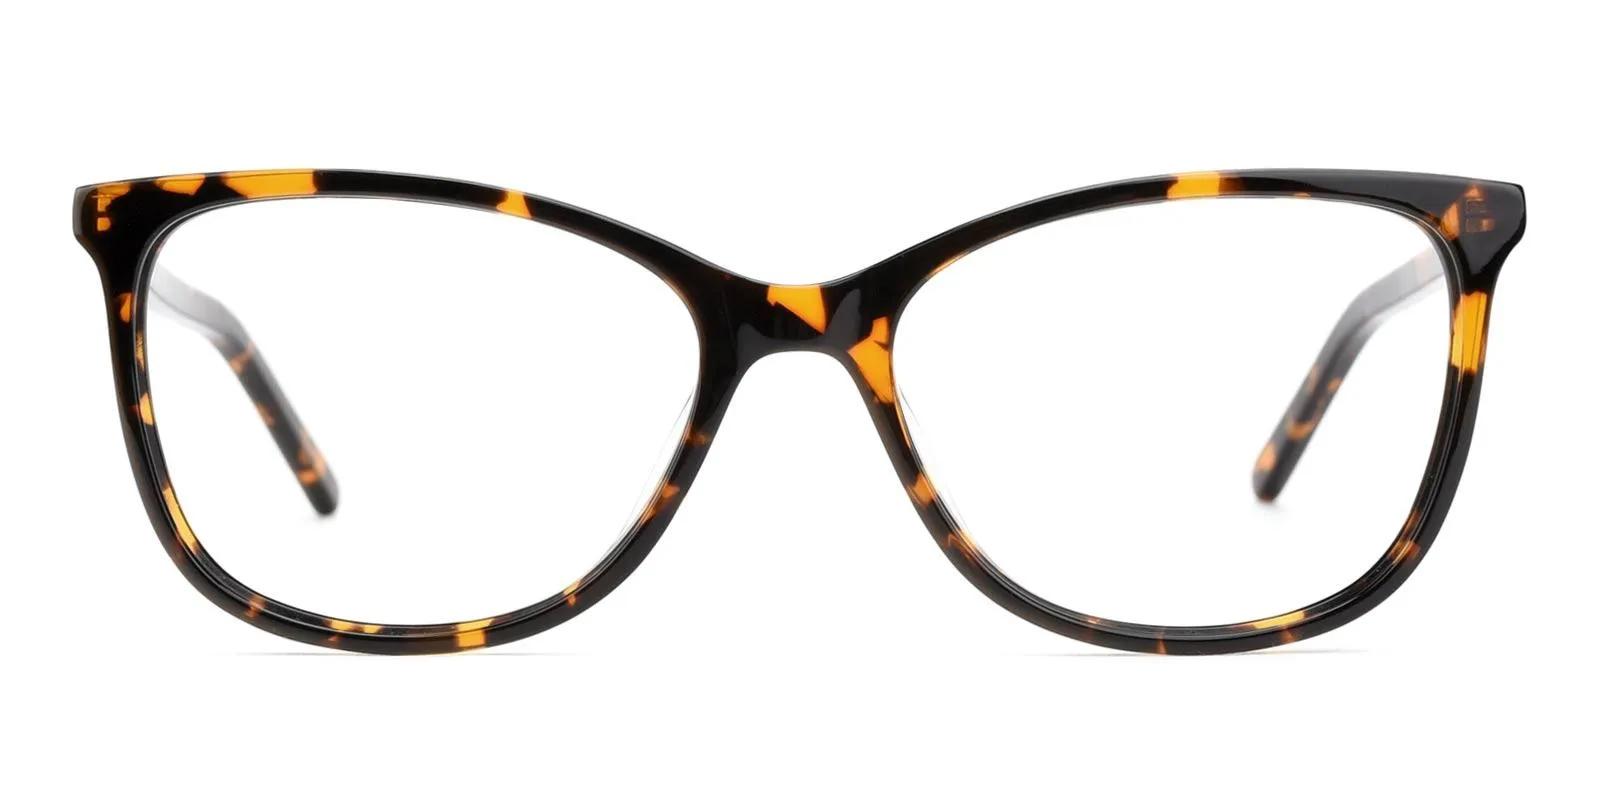 Viola Tortoise Acetate Eyeglasses , Fashion , SpringHinges , UniversalBridgeFit Frames from ABBE Glasses